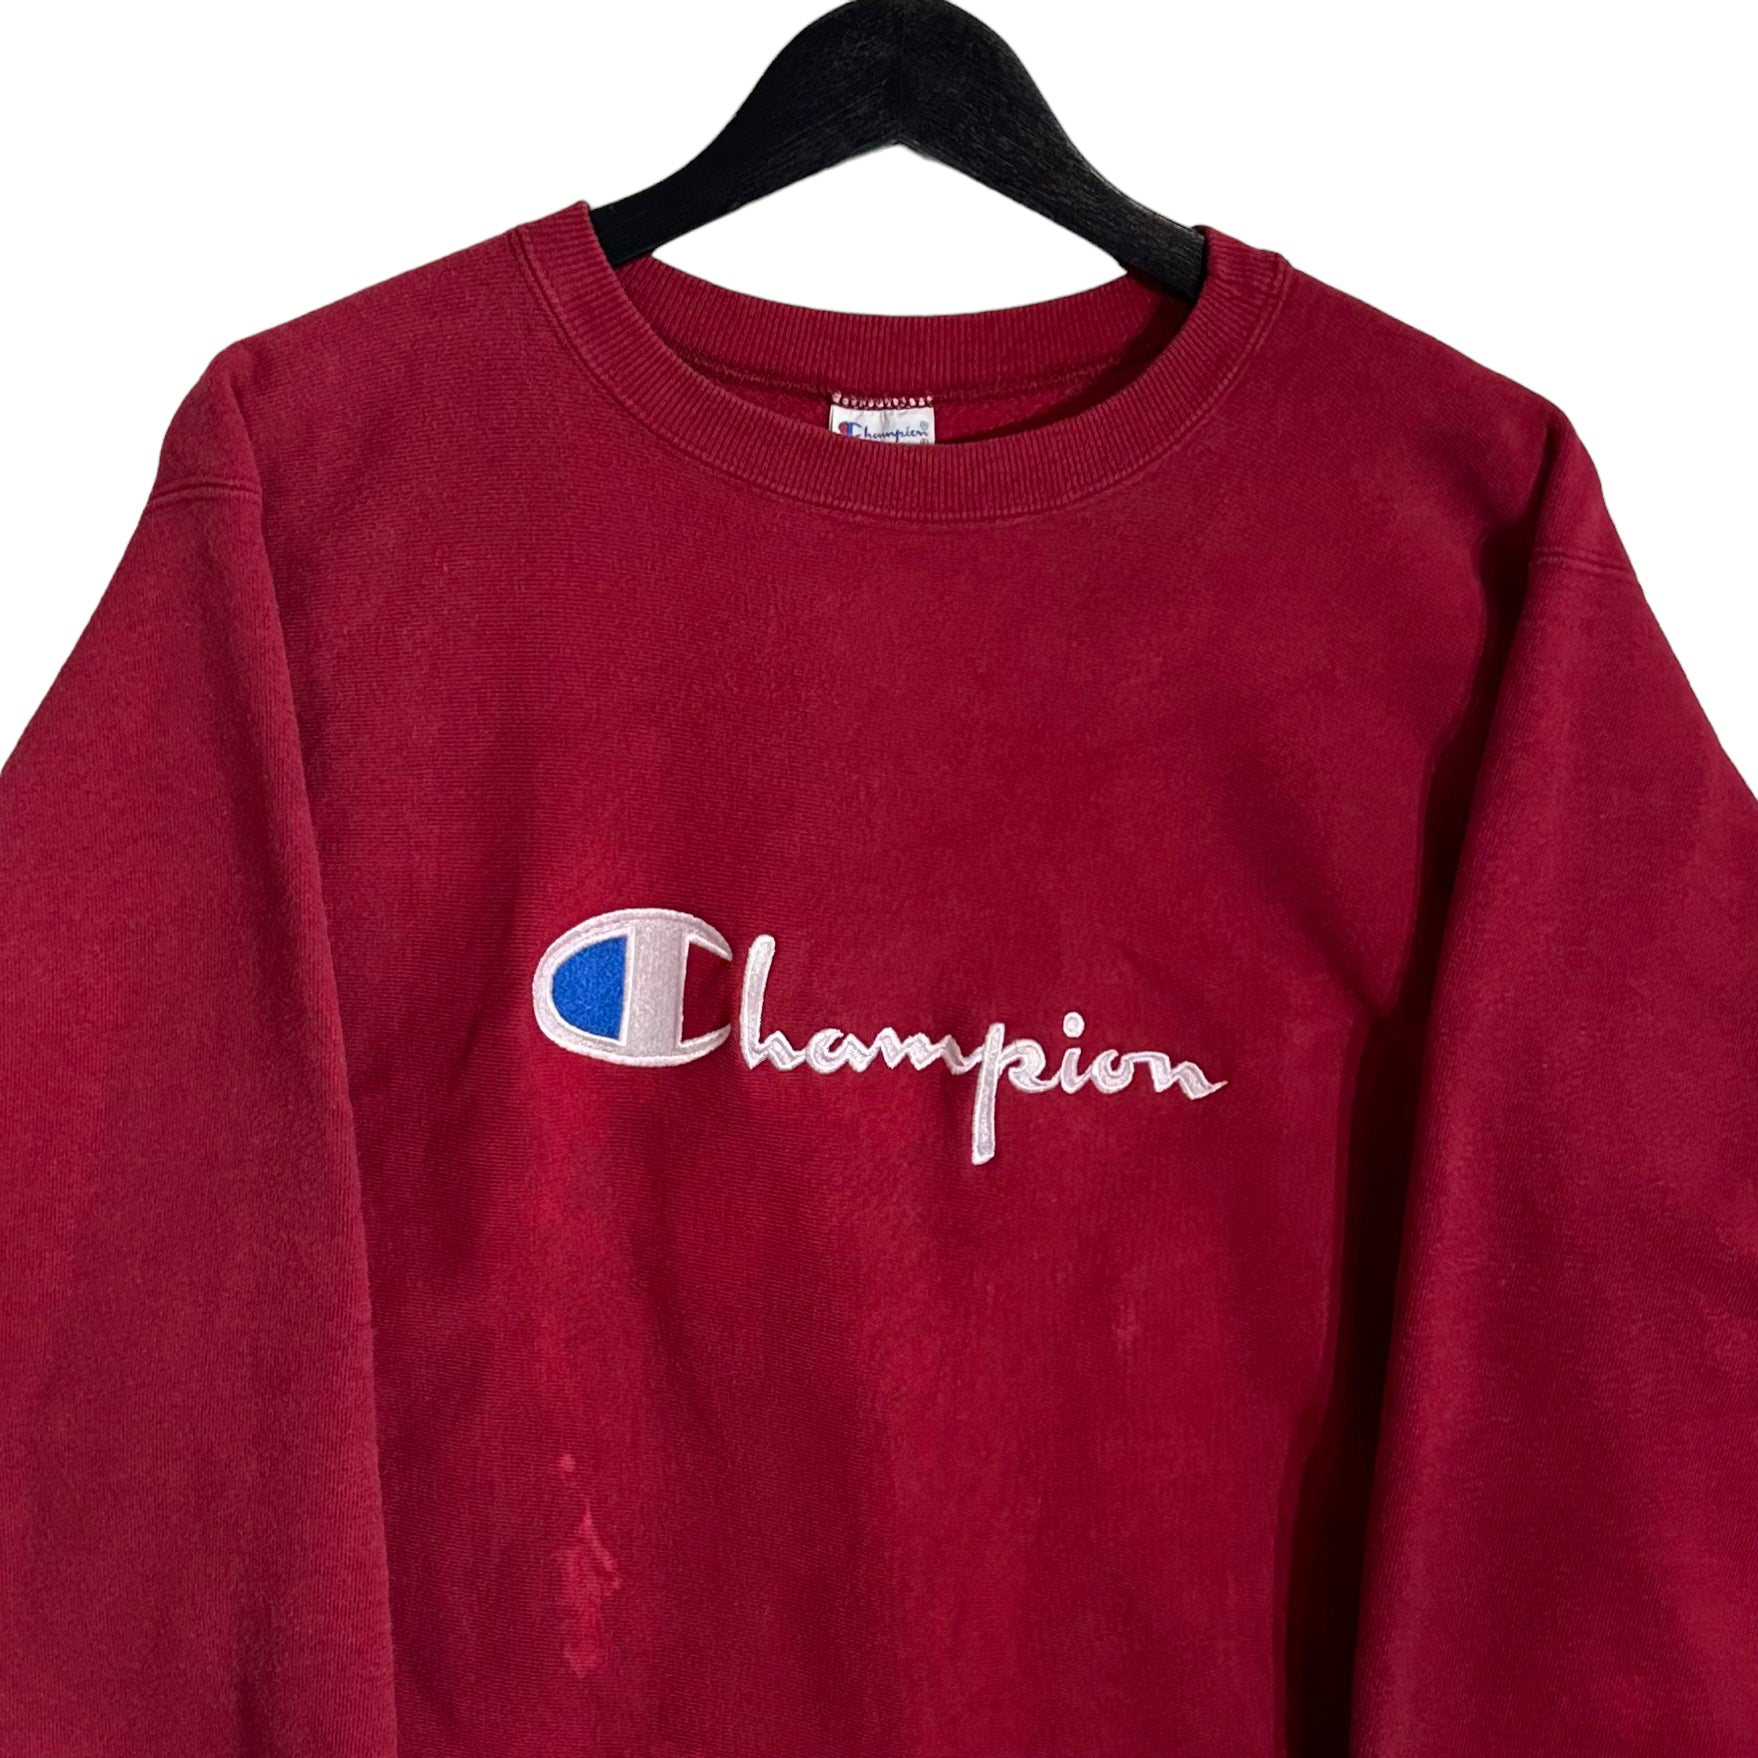 Vintage Champion Embroidered Reverse Weave Crewneck